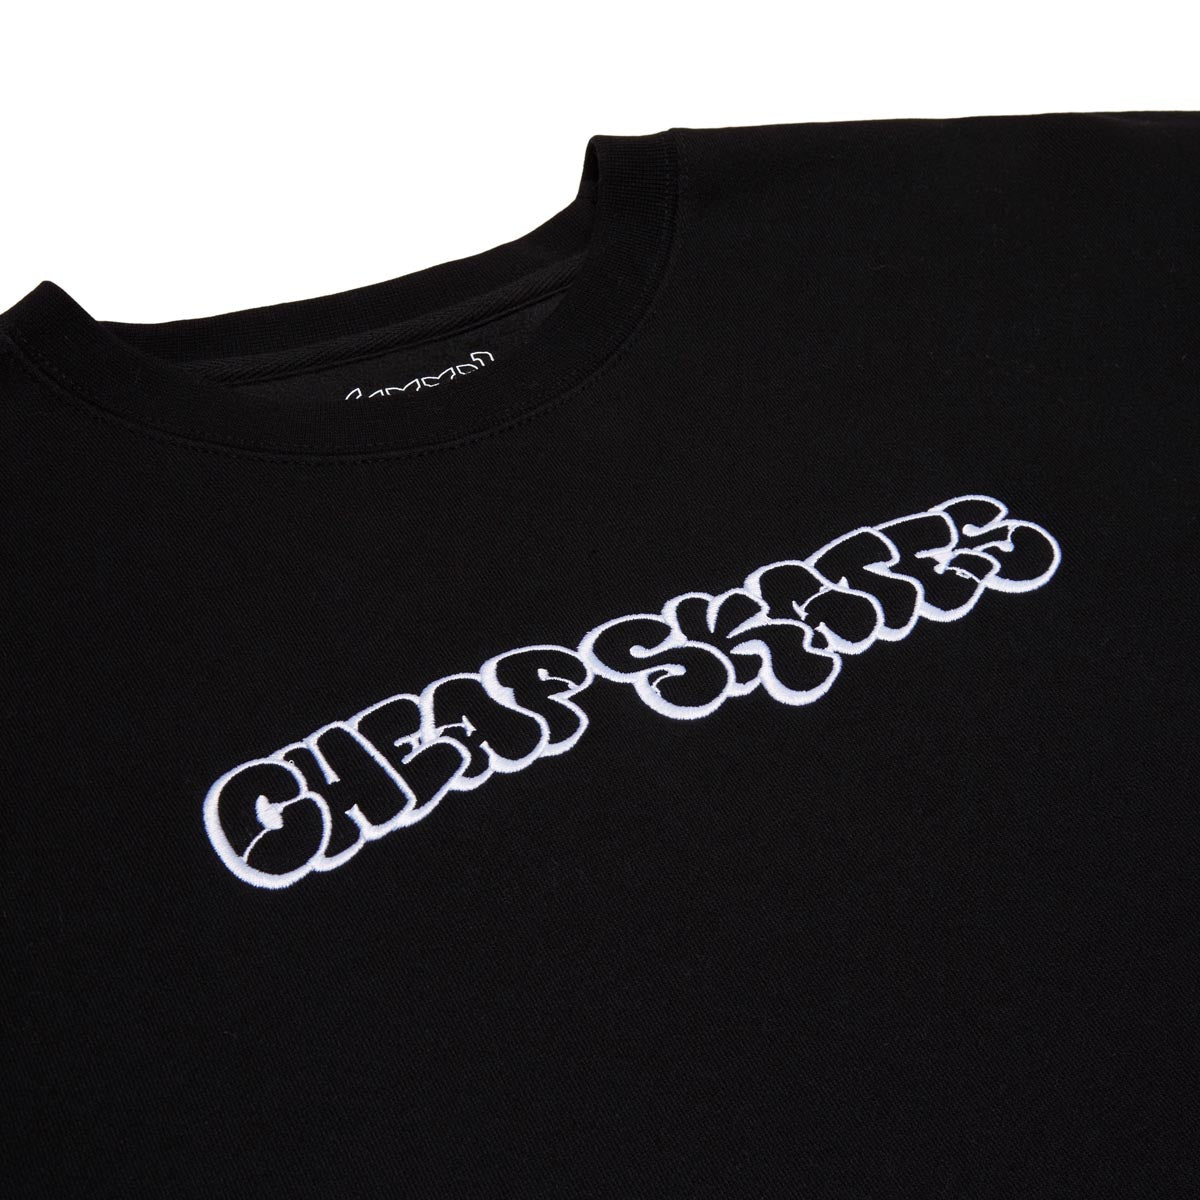 CCS Cheap Skates Tag Heavy Crewneck Sweatshirt - Black image 2